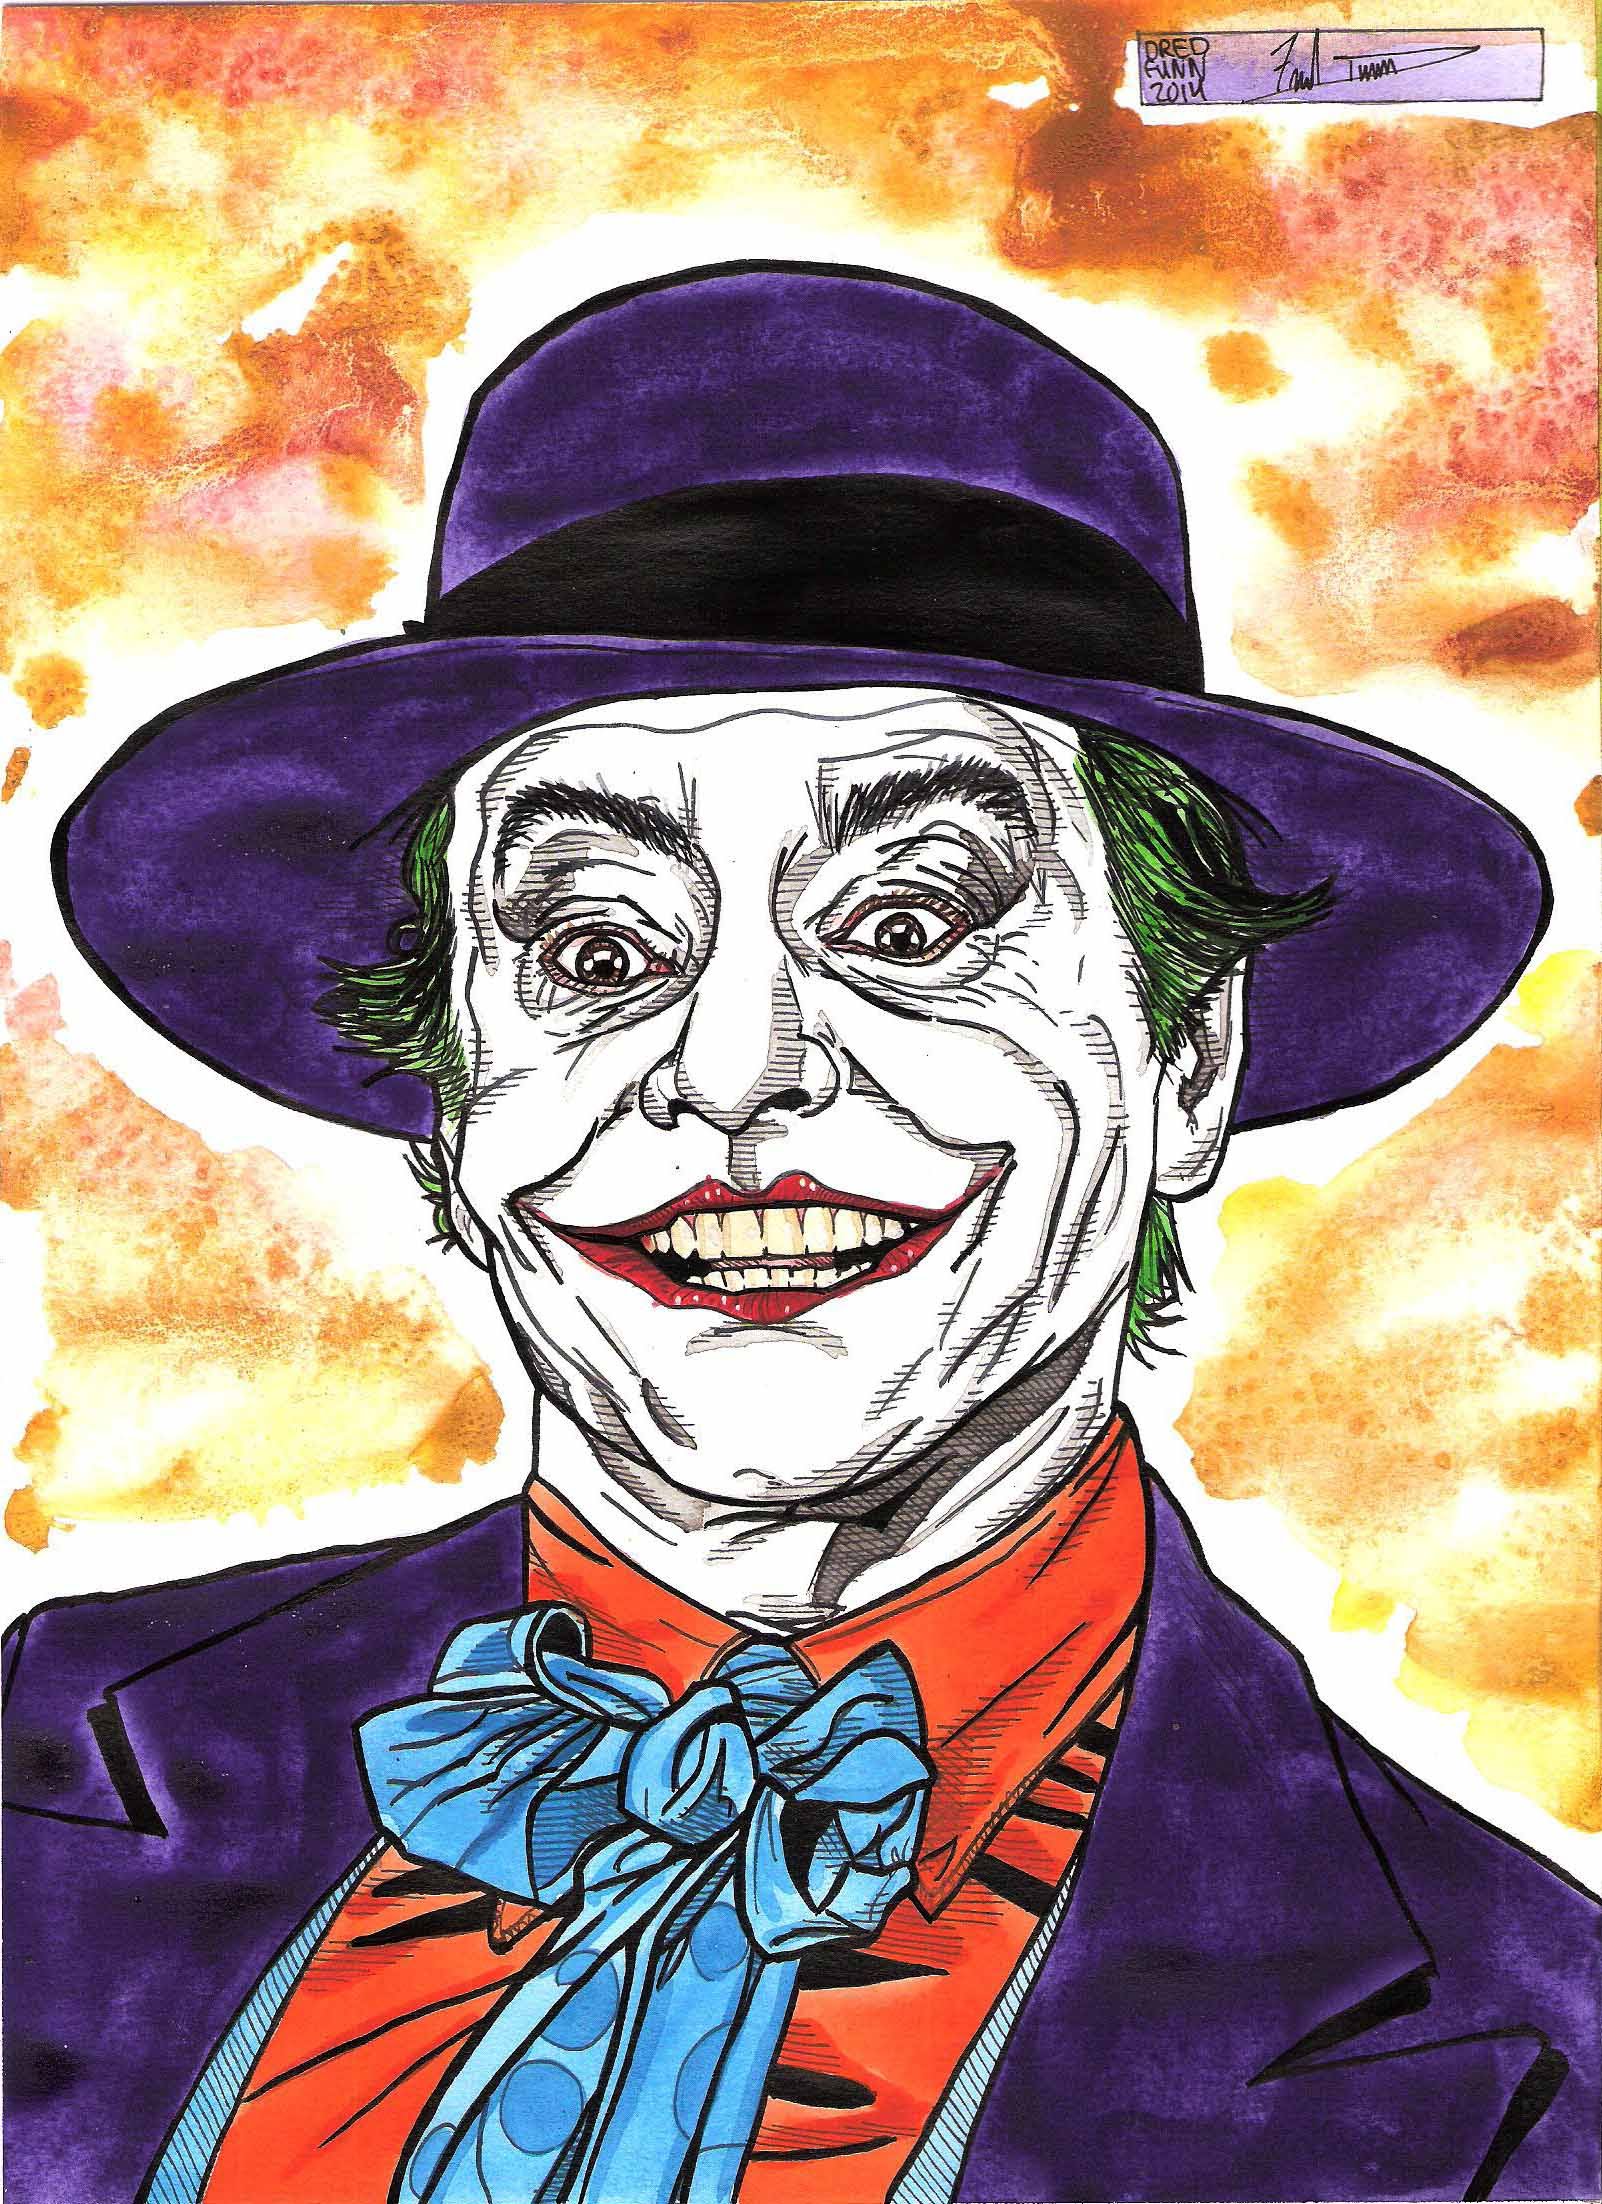 Jack Nicholson Joker Painting at PaintingValley.com | Explore ...